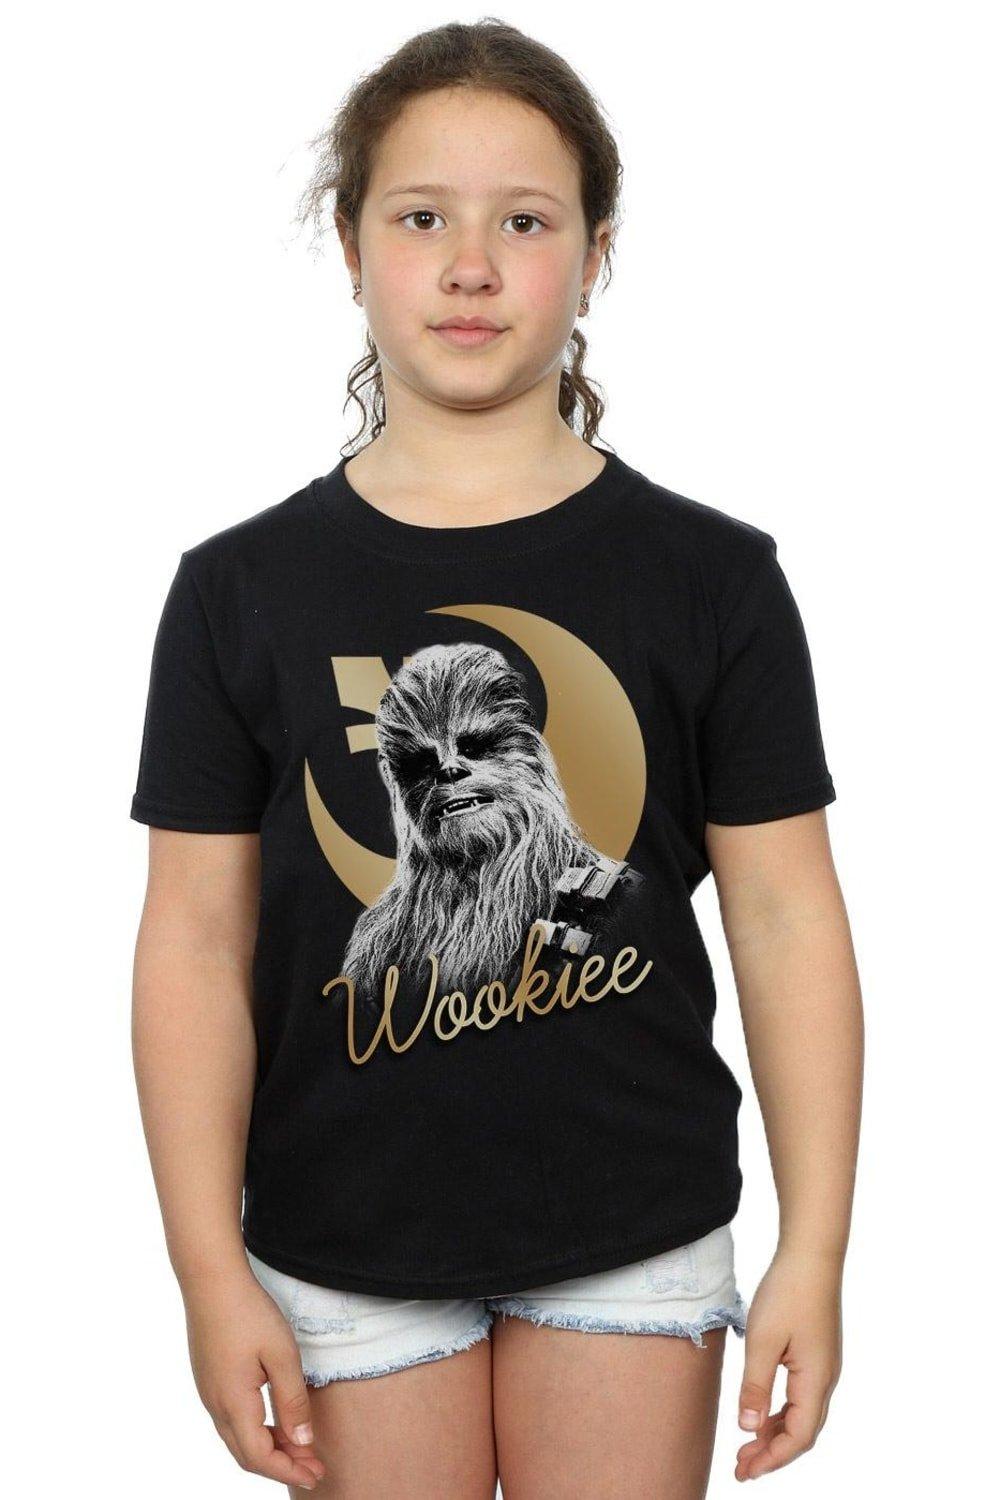 The Last Jedi Gold Chewbacca Cotton T-Shirt